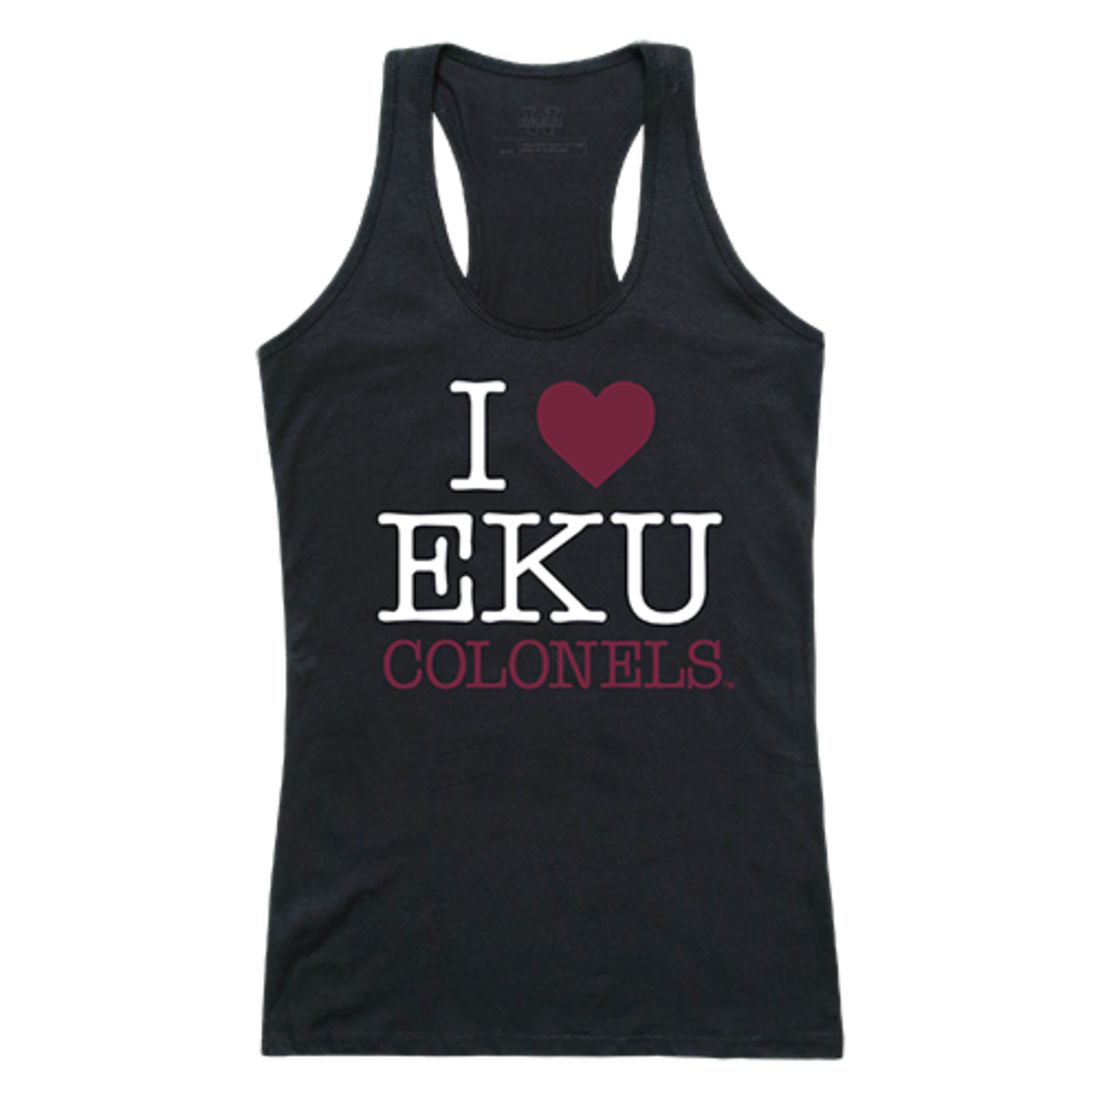 EKU Eastern Kentucky University Colonels Womens Love Tank Top Tee T-Shirt Black-Campus-Wardrobe